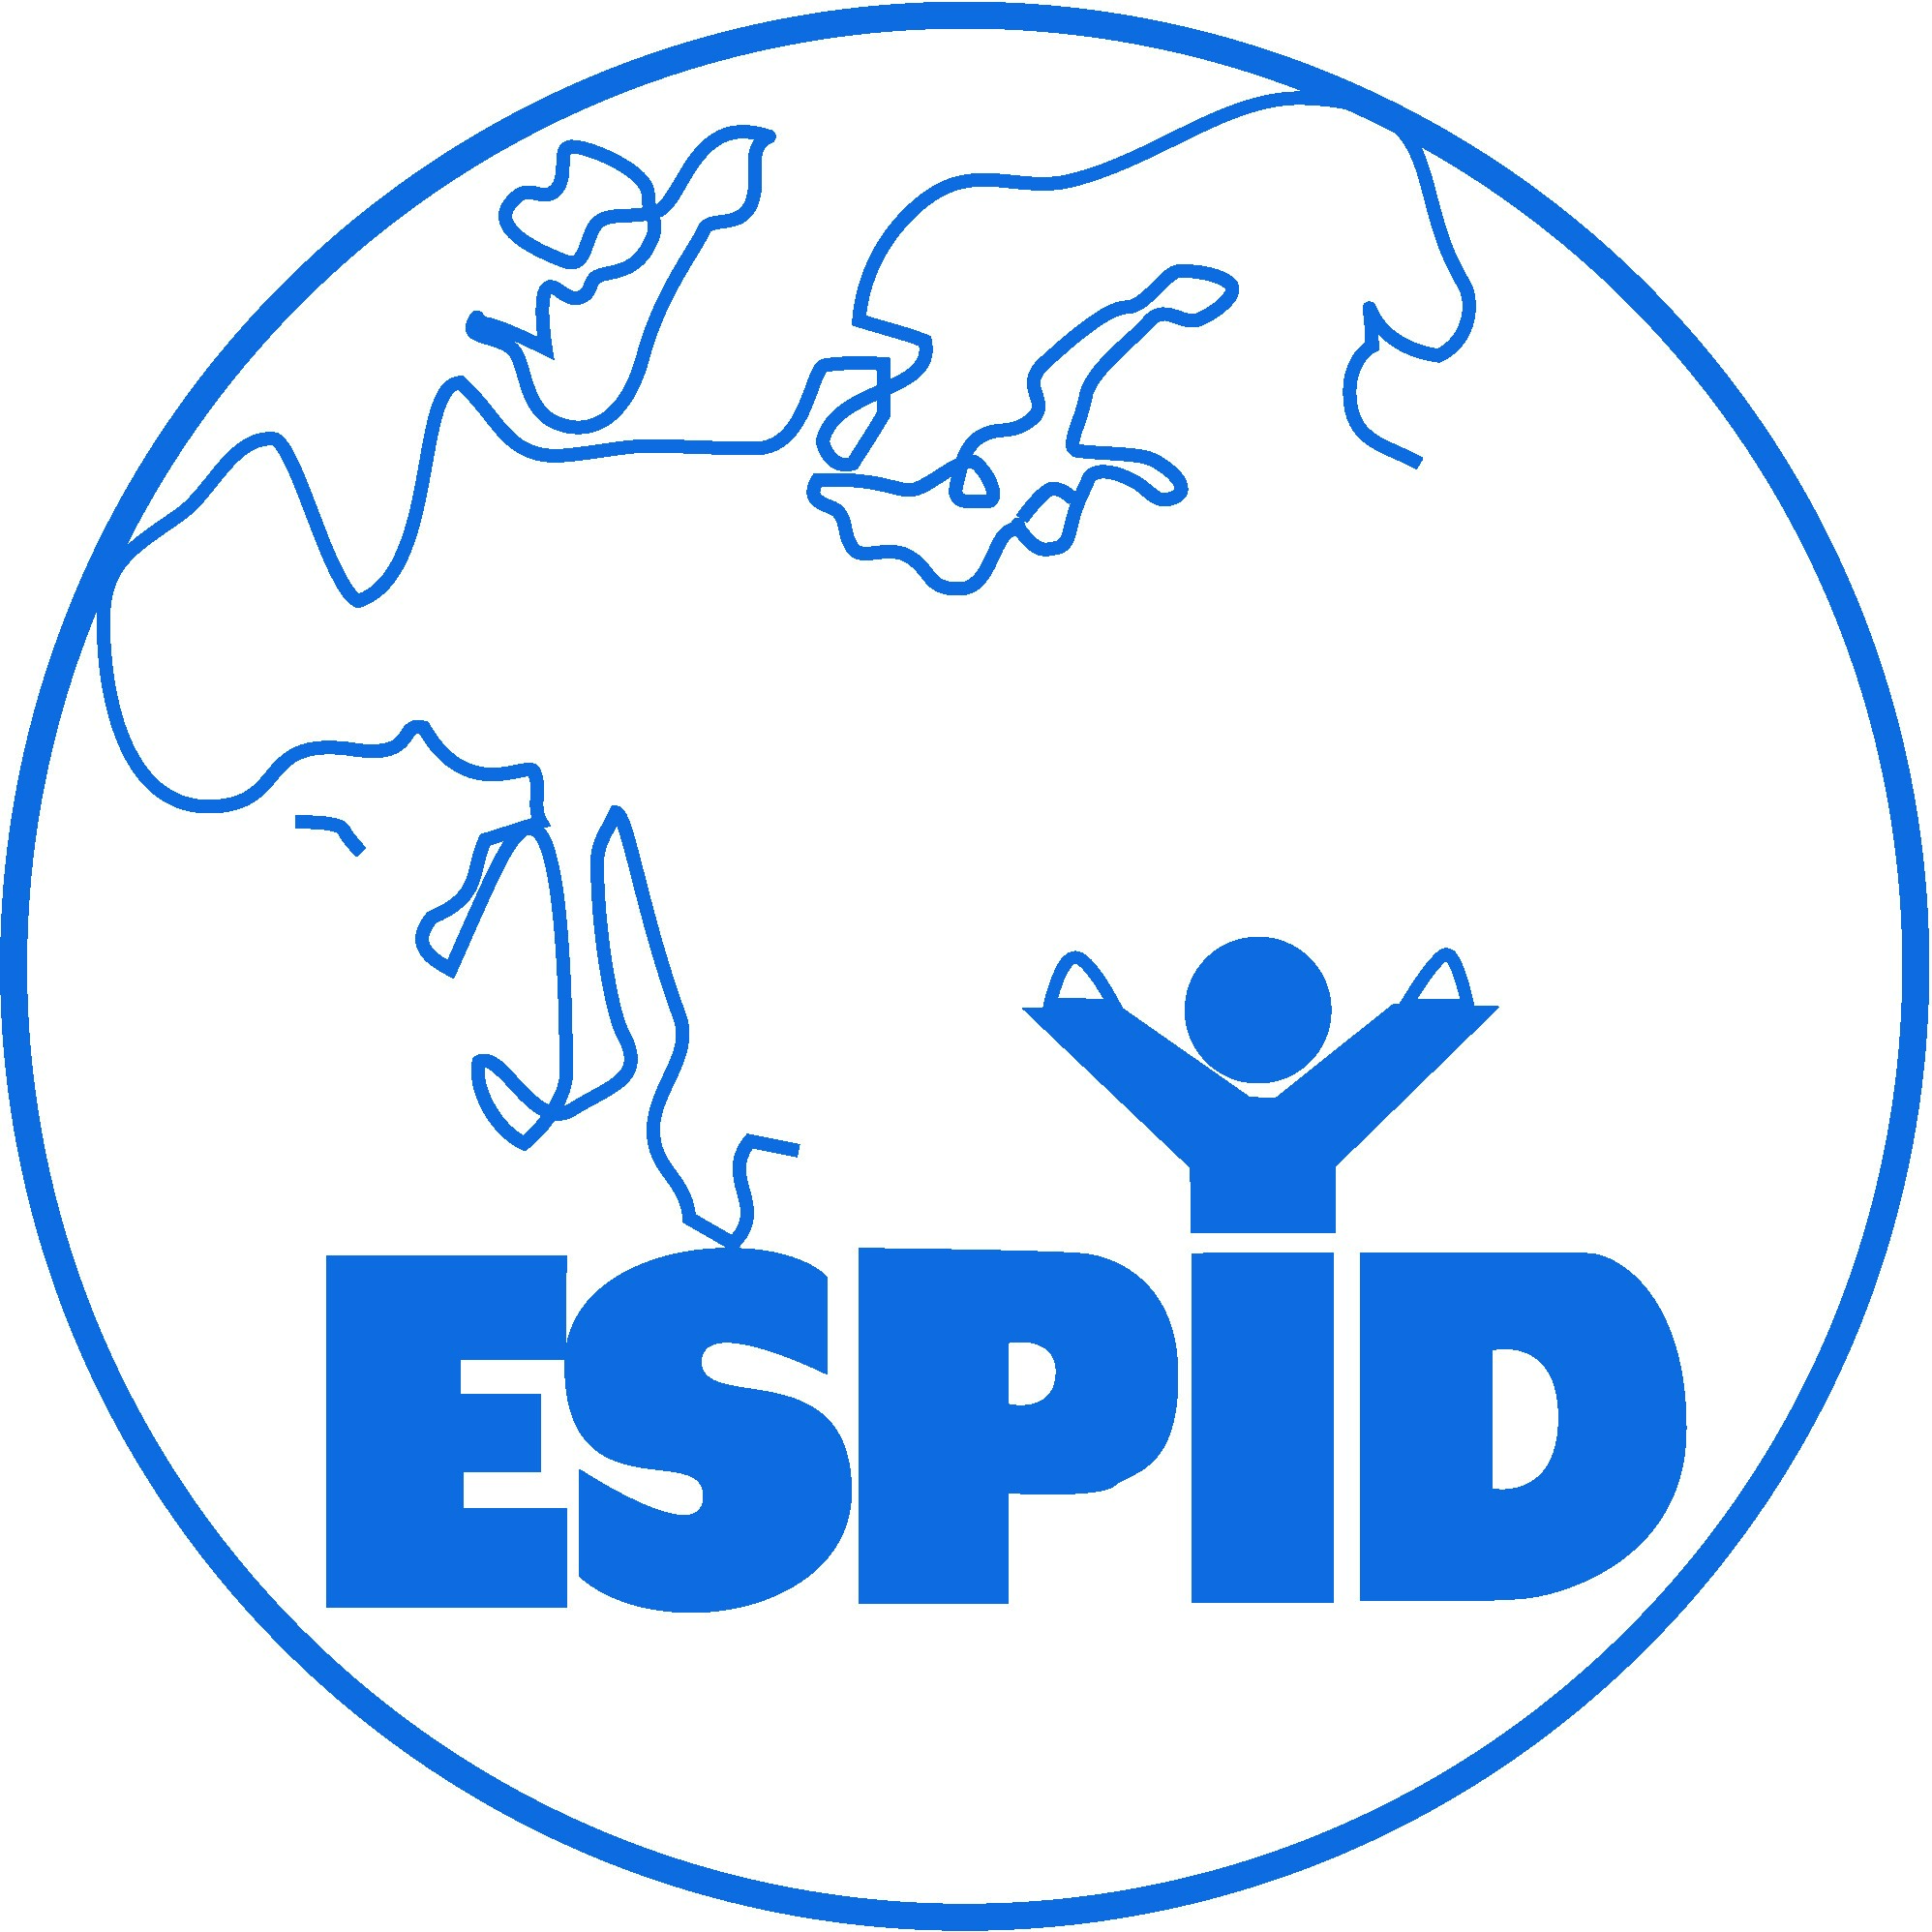 ESPID 2021 VIRTUAL - 39th Meeting of The European Society for Paediatric Infectious Diseases / Virtual